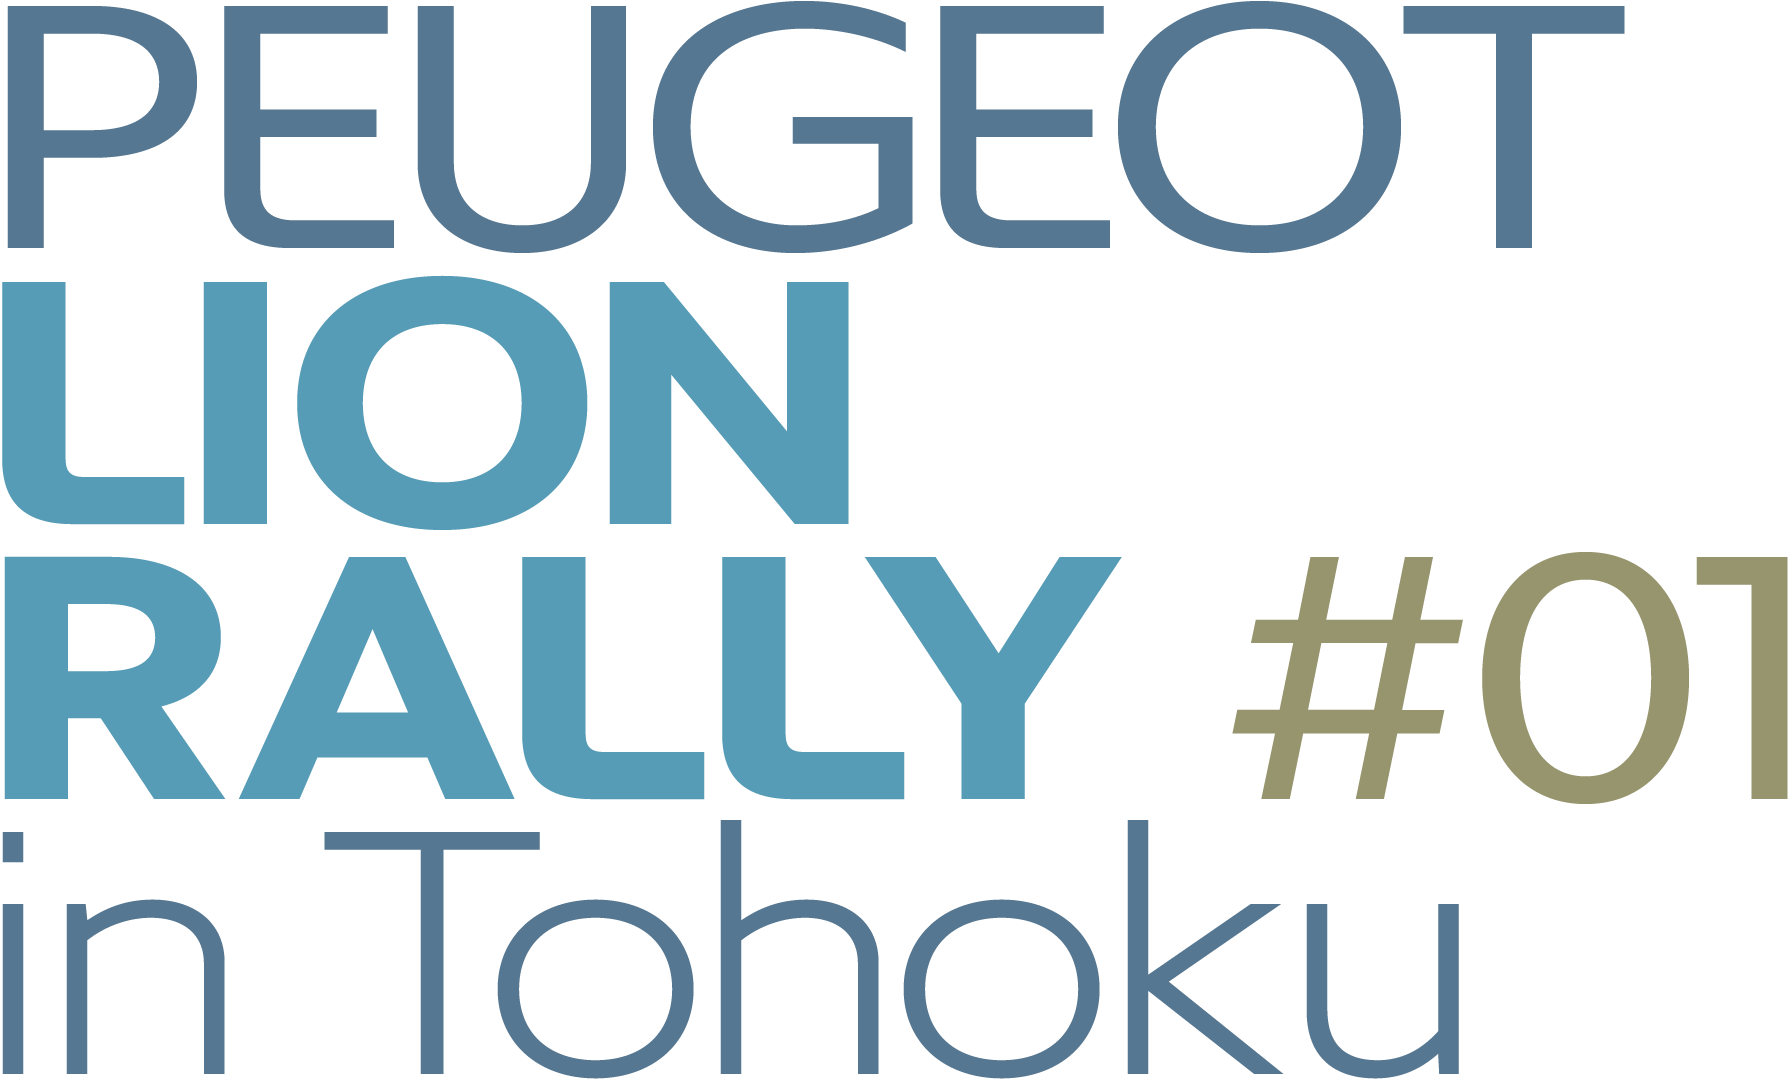 PEUGEOT LION RALLY #01 in Tohoku 